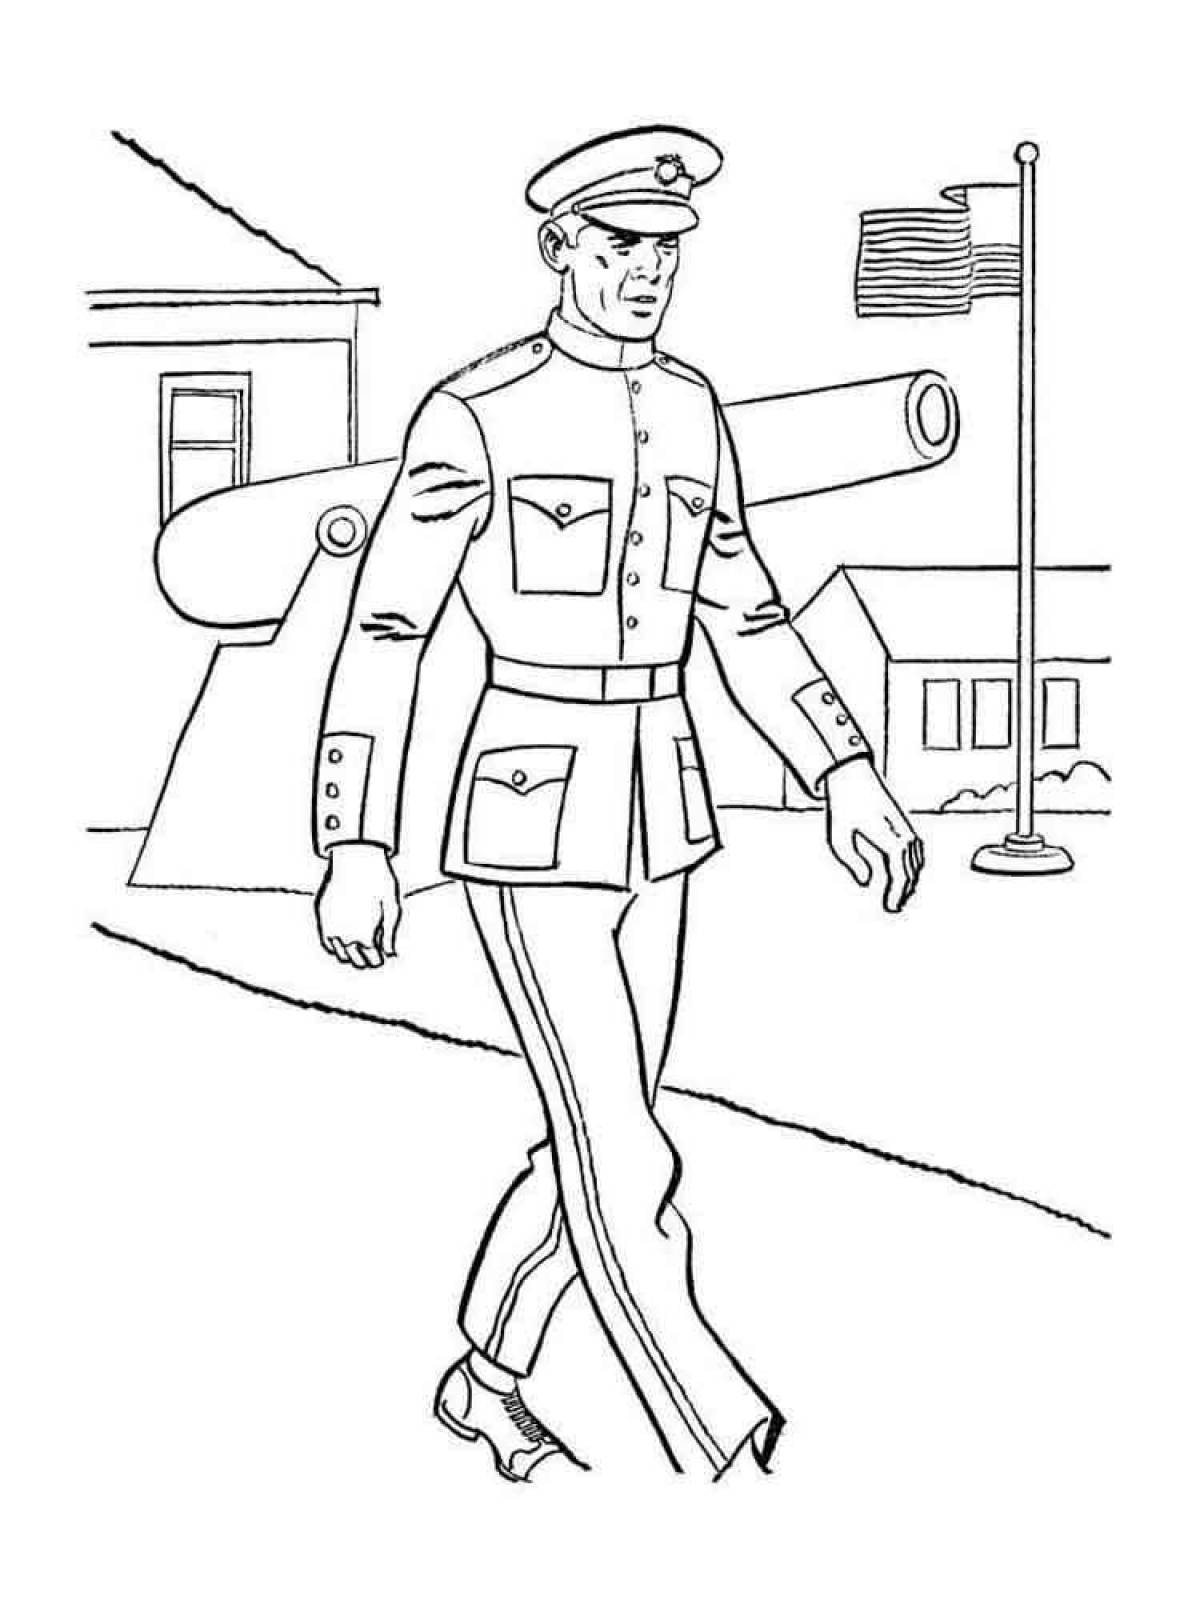 Invincible soldier coloring page